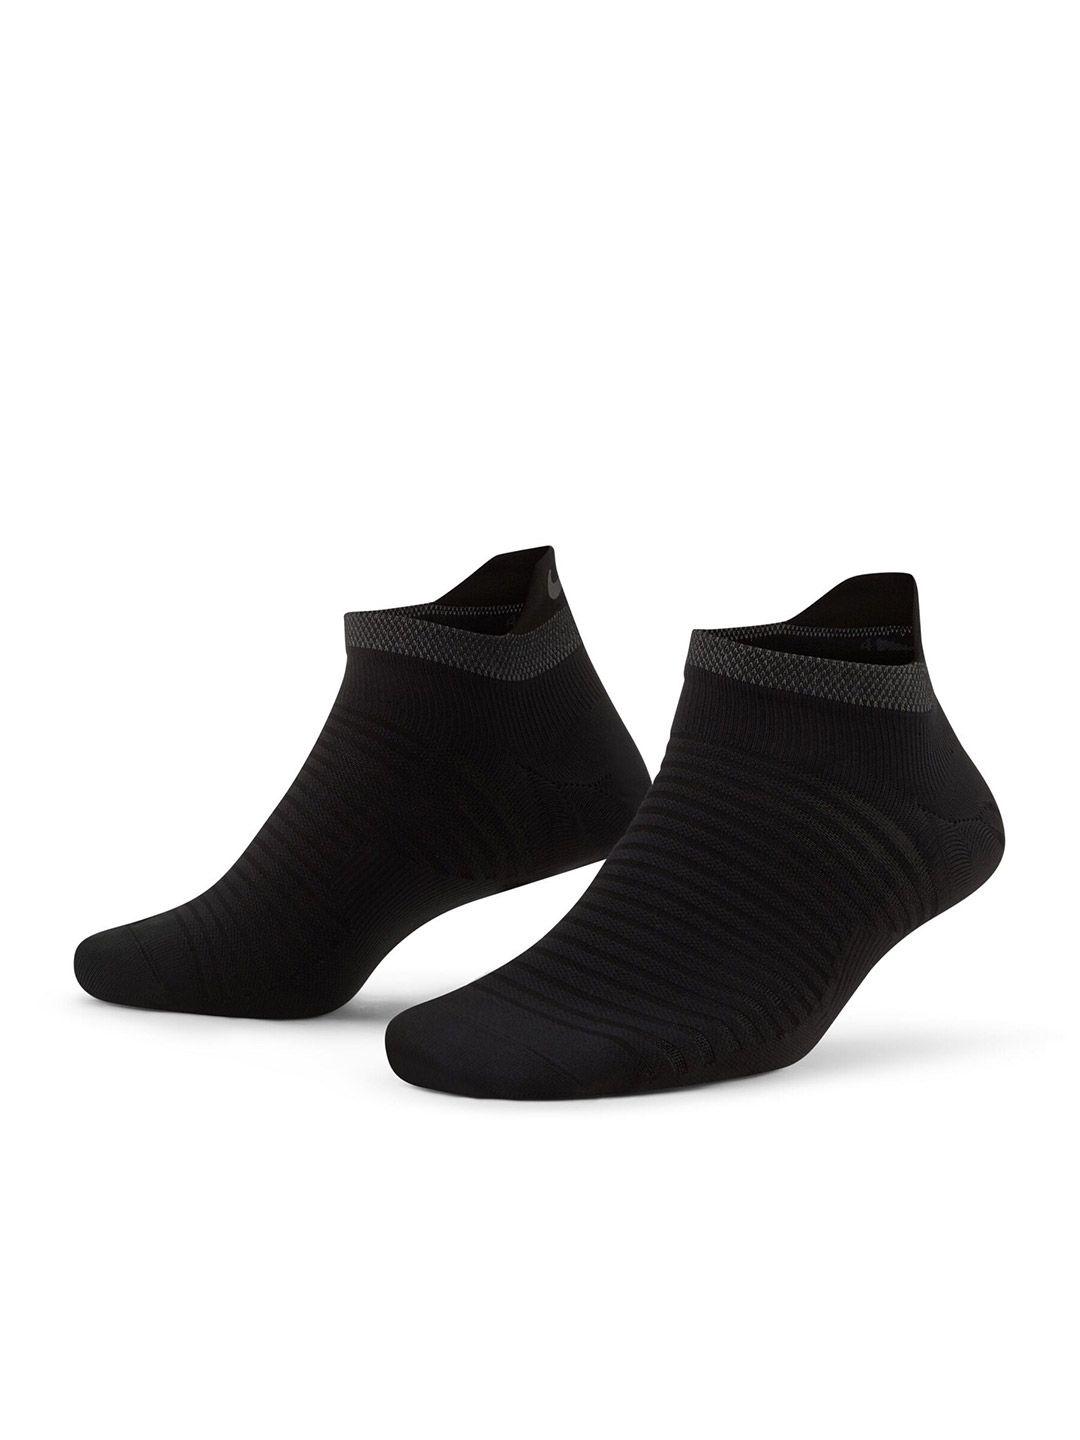 nike-spark-spark-lightweight-no-show-running-ankle-length-socks